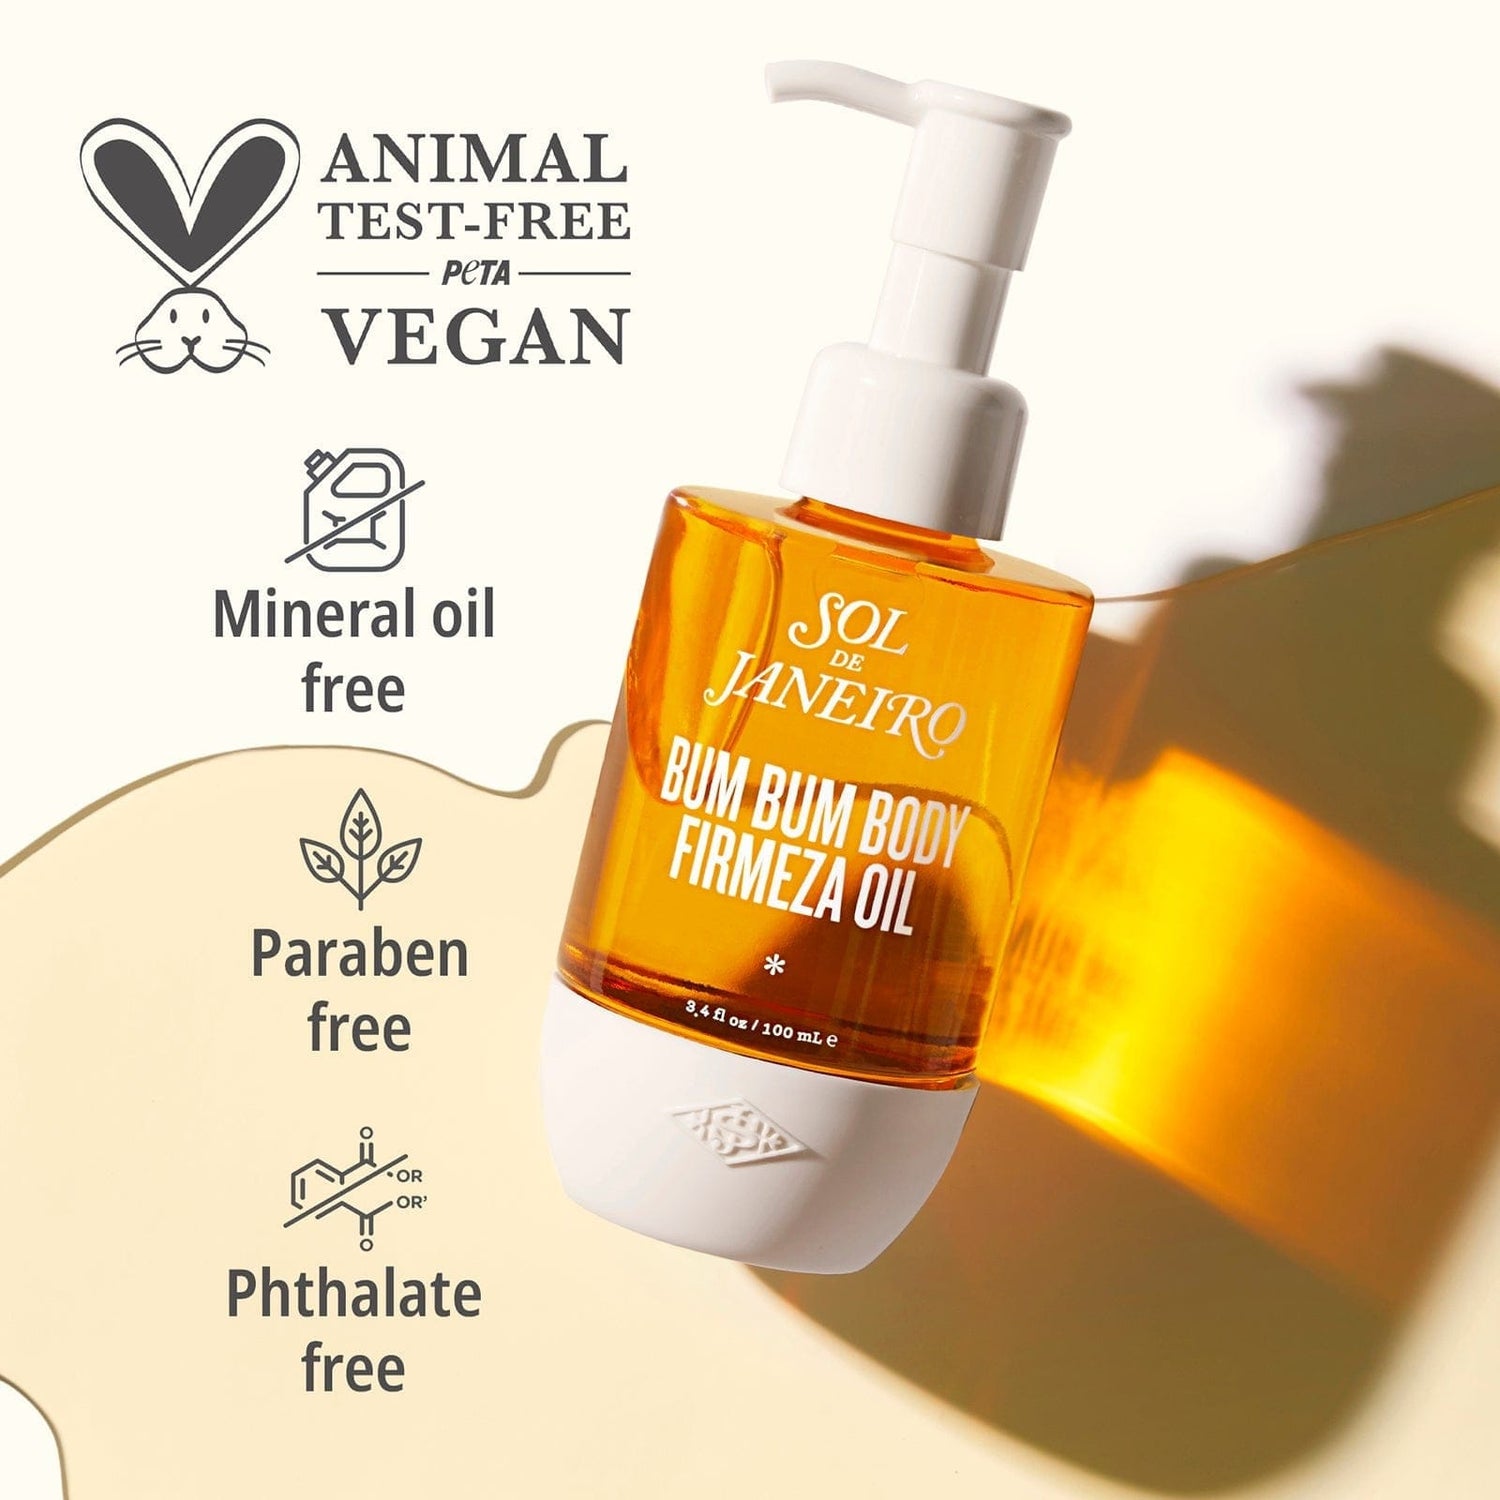 Animal test-free PETA vegan. Free of mineral oil, parabens, and phthalate.